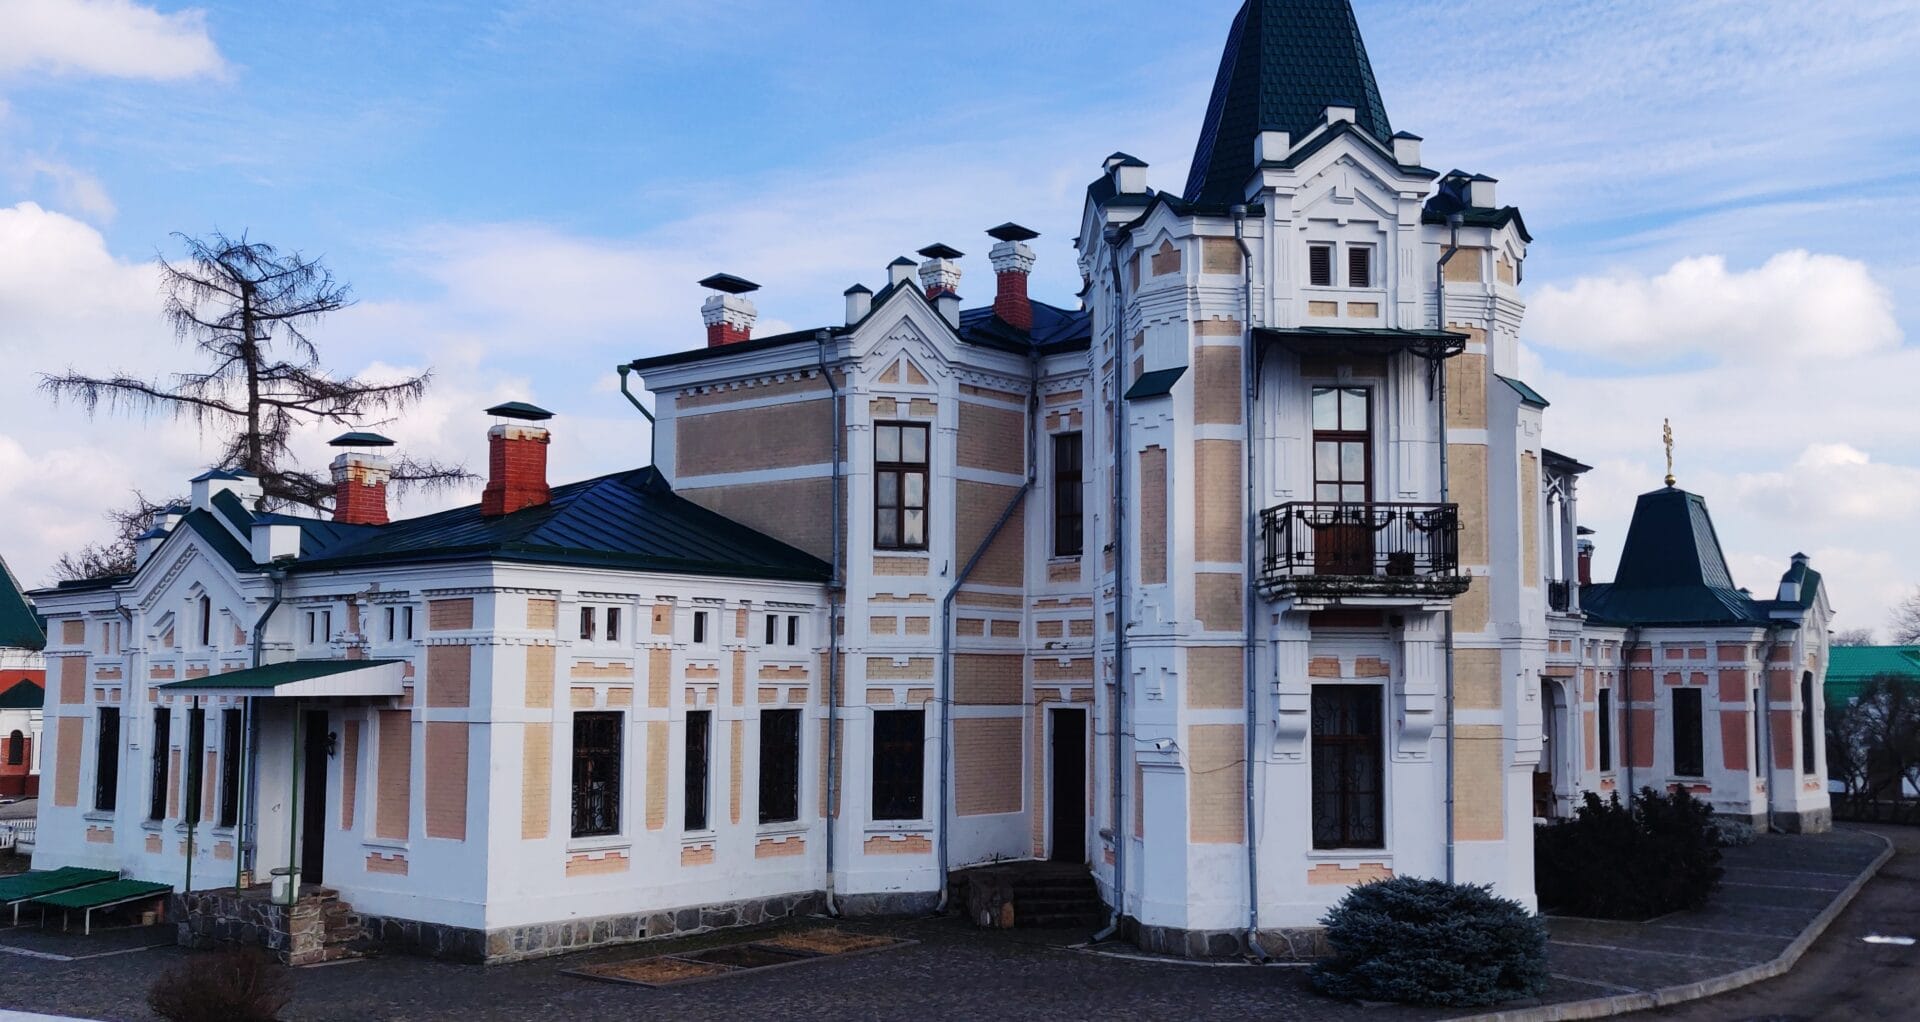 Chojecki Manor, an architectural landmark of national importance